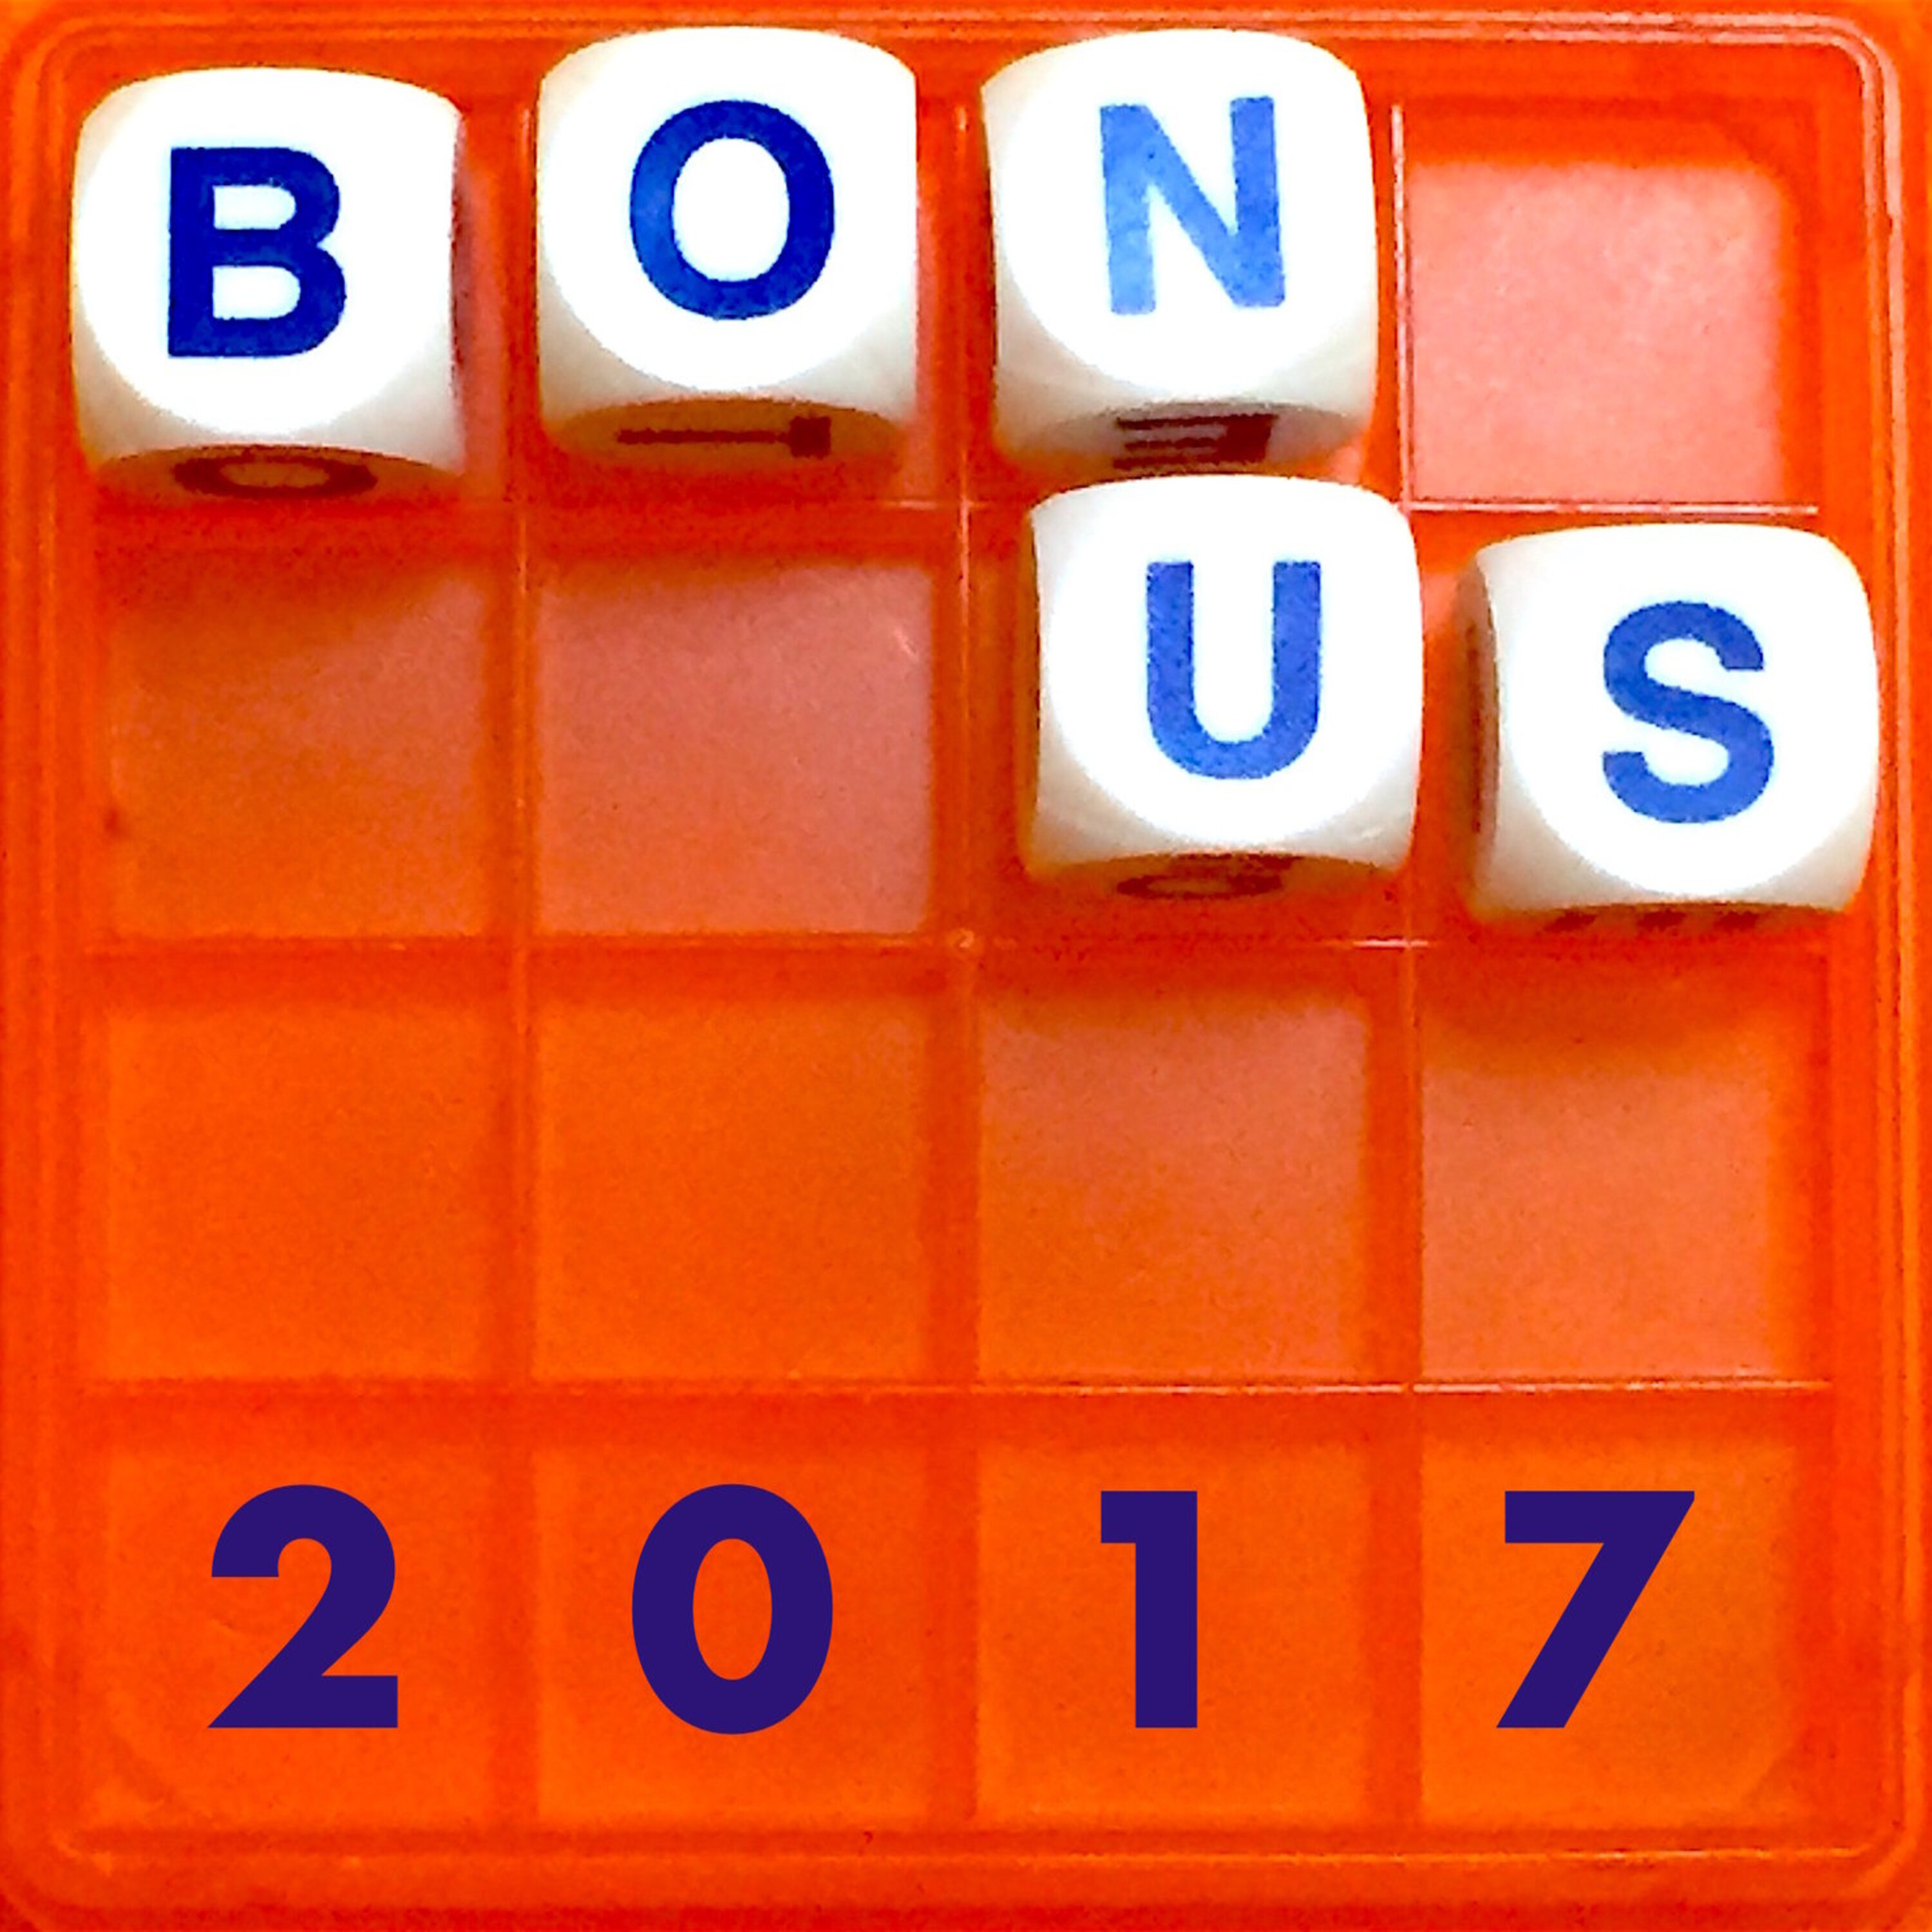 Thumbnail for "70. Bonus 2017".